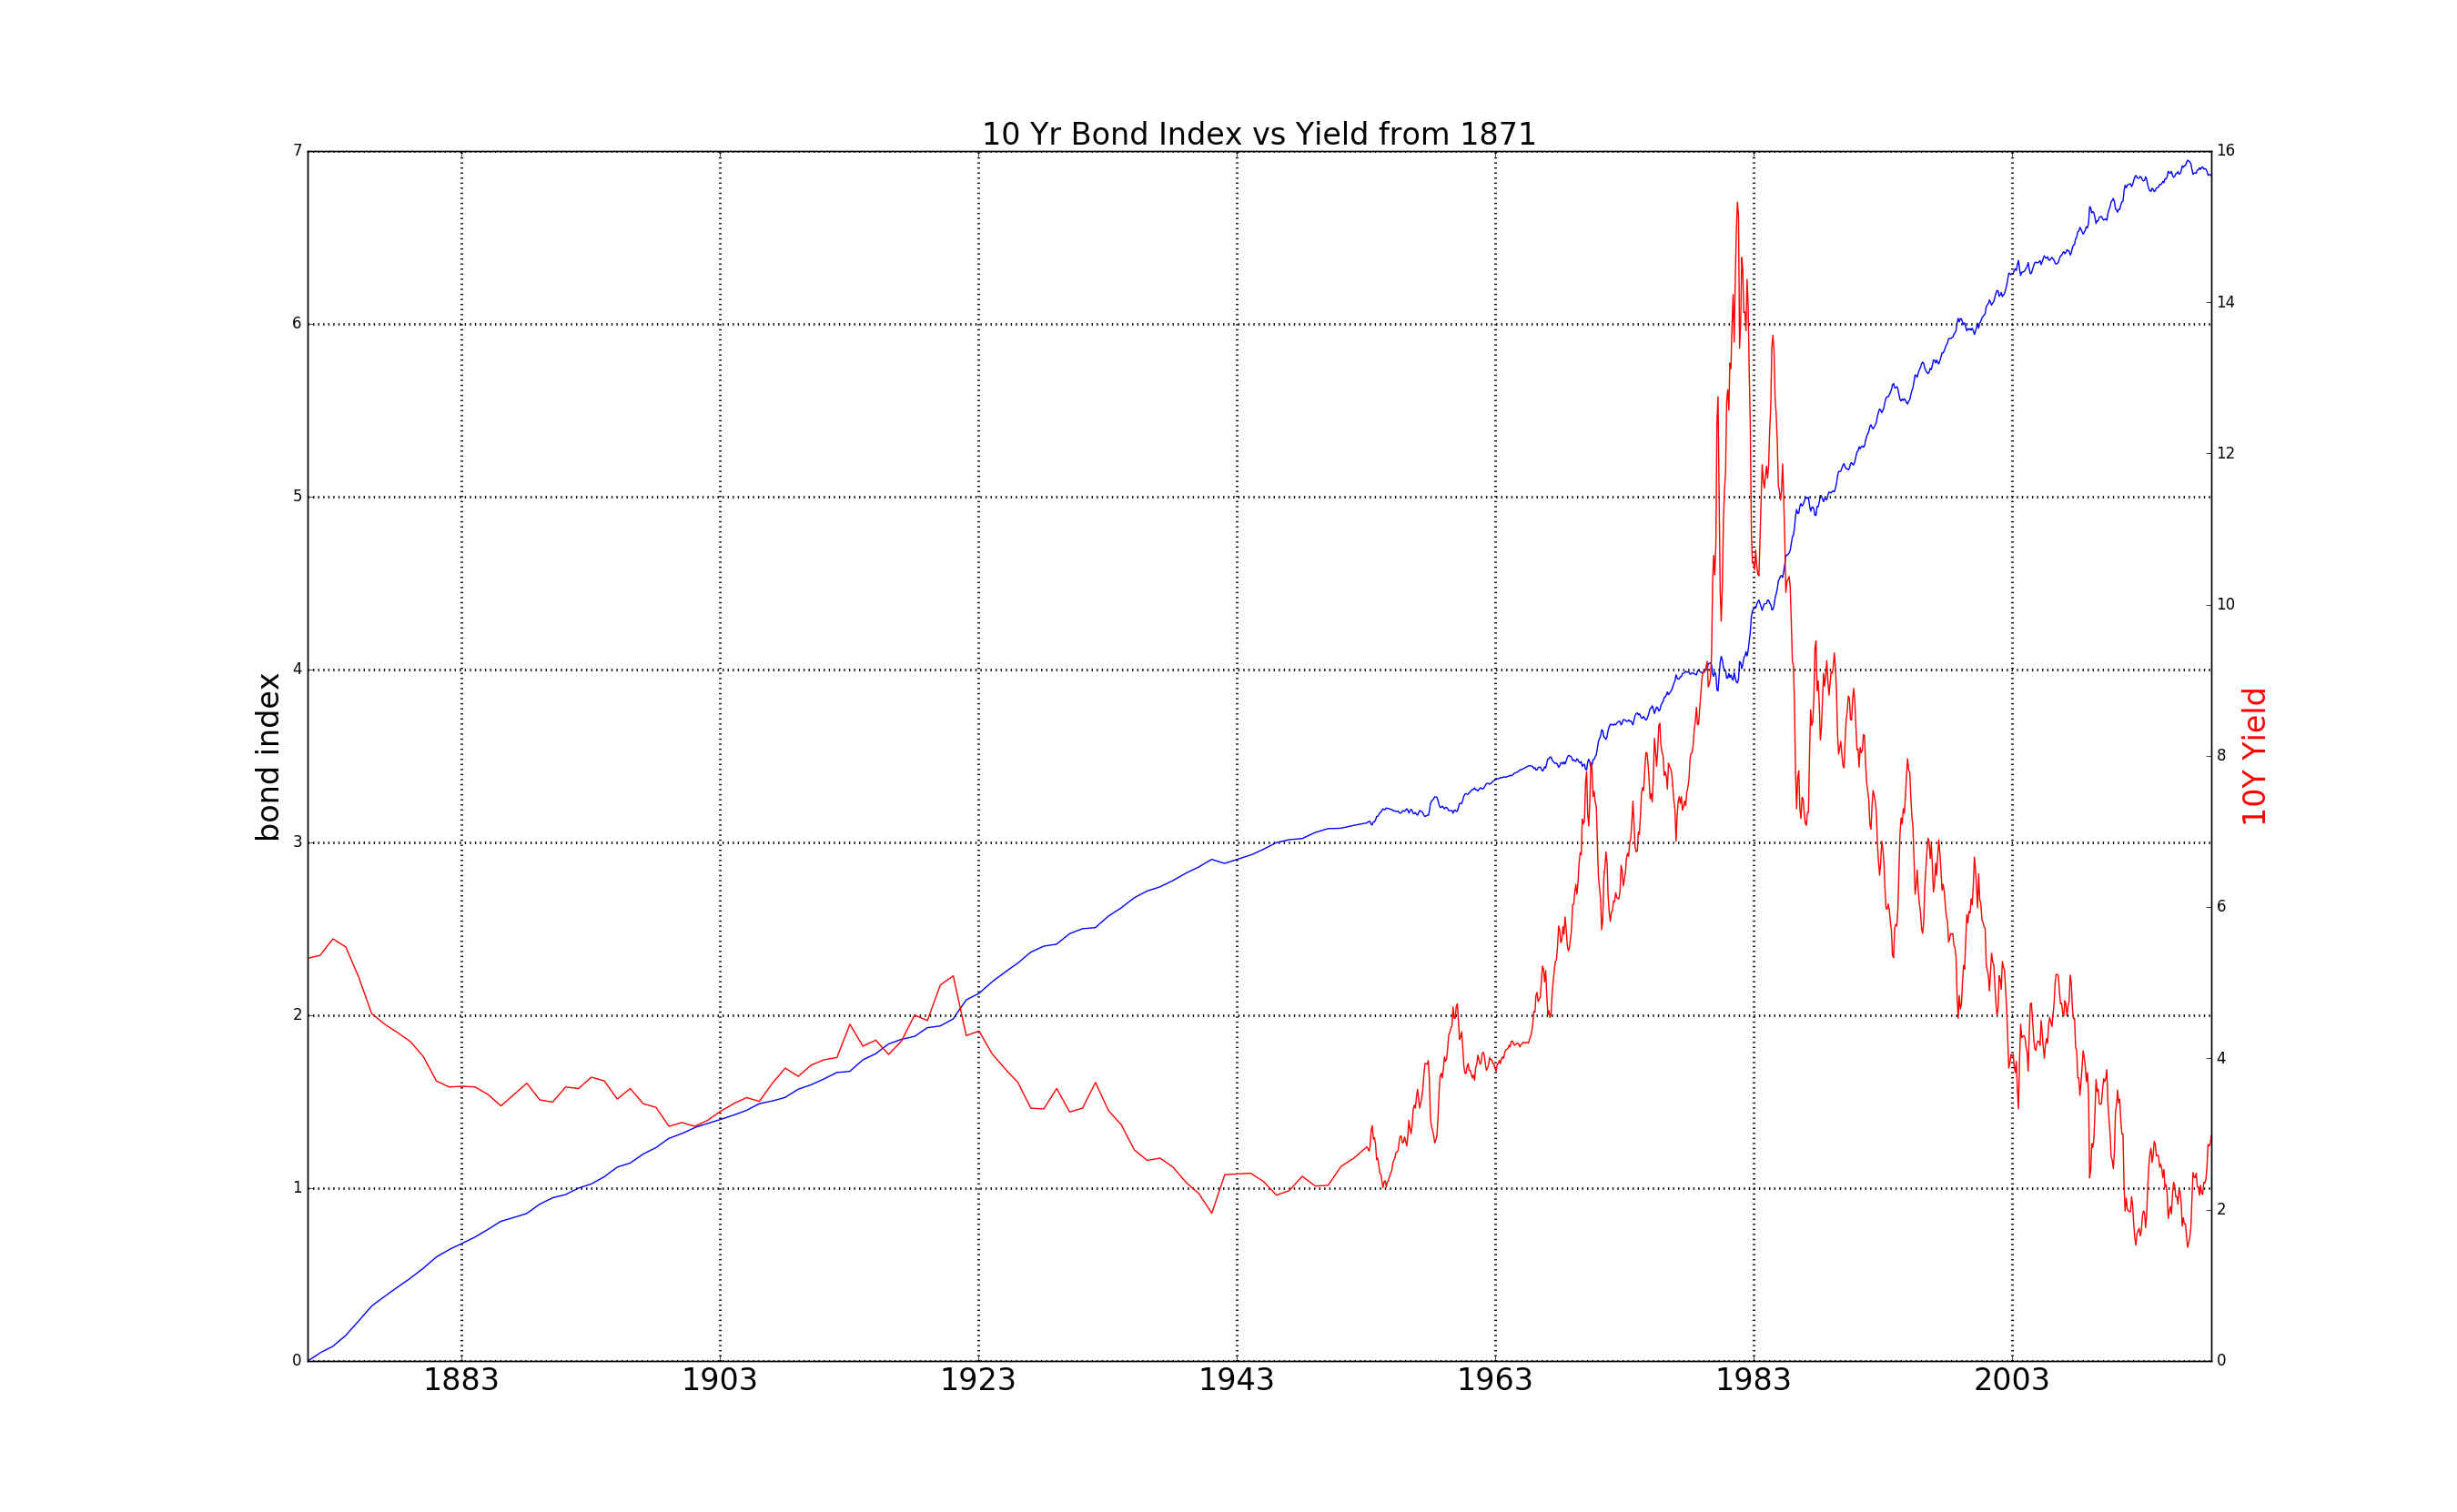 Bond Index vs 10 Yr Rate, 1871 - 2018